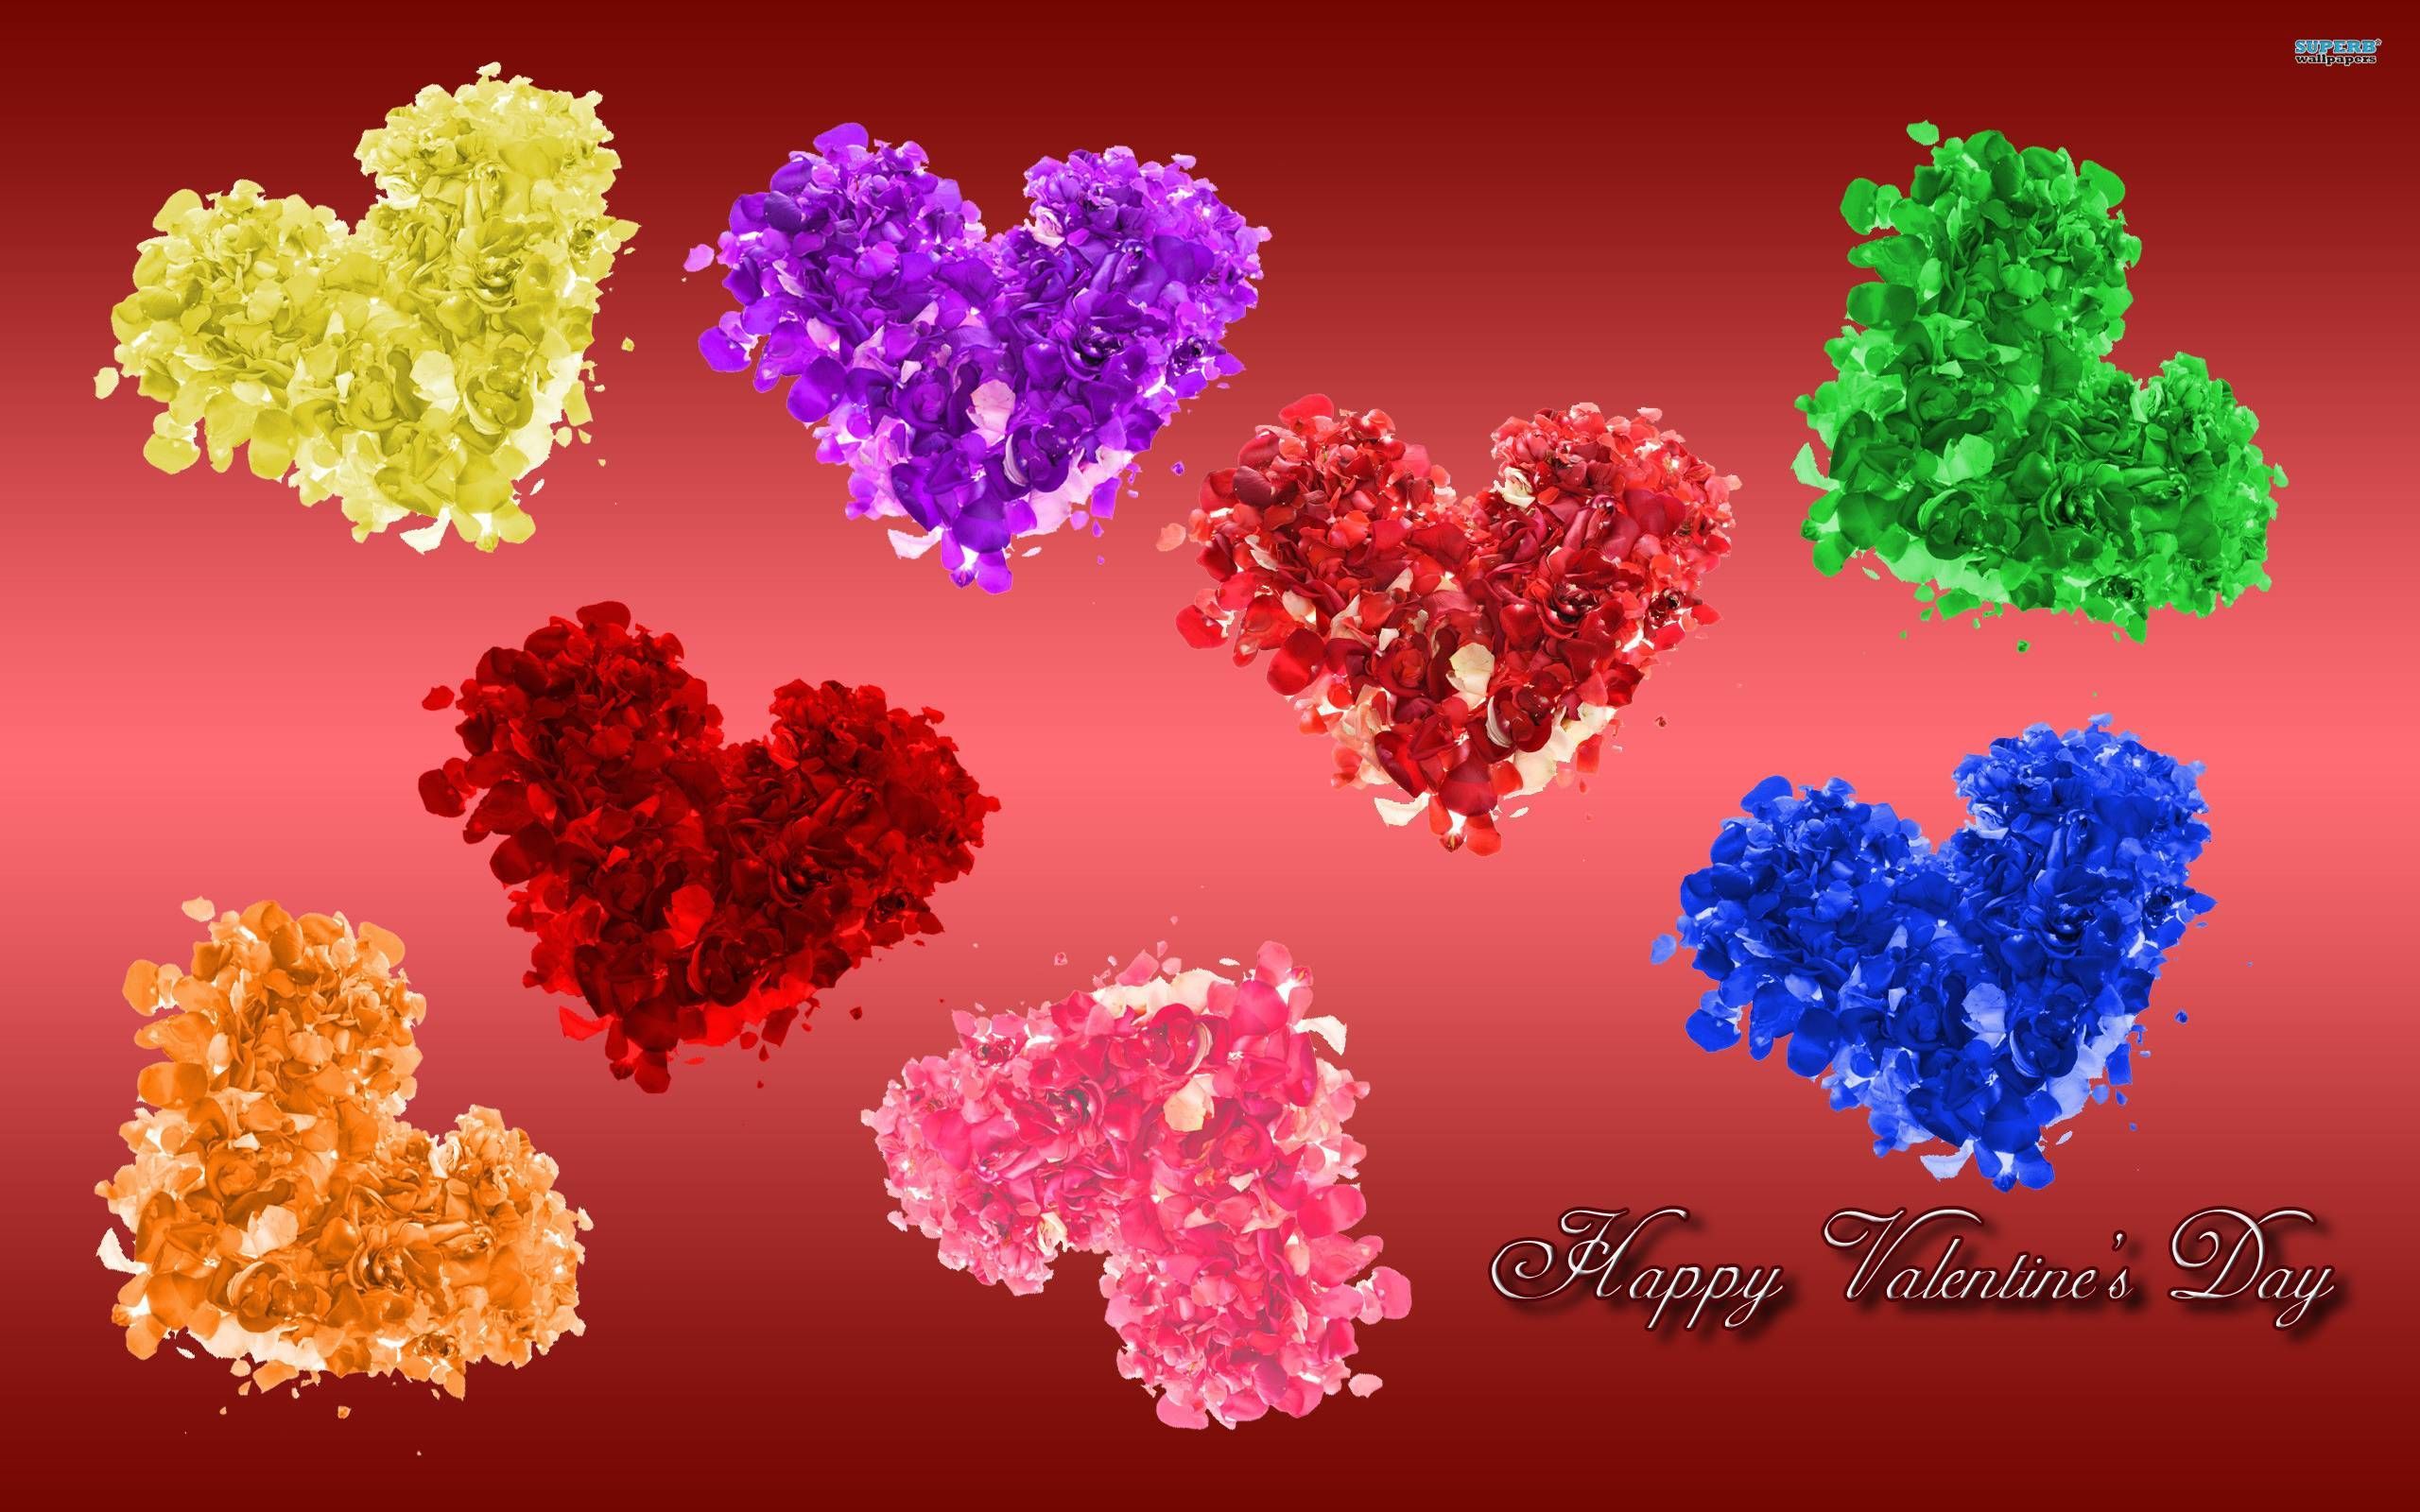 Happy Valentines Day Desktop Wallpaper .nl.com